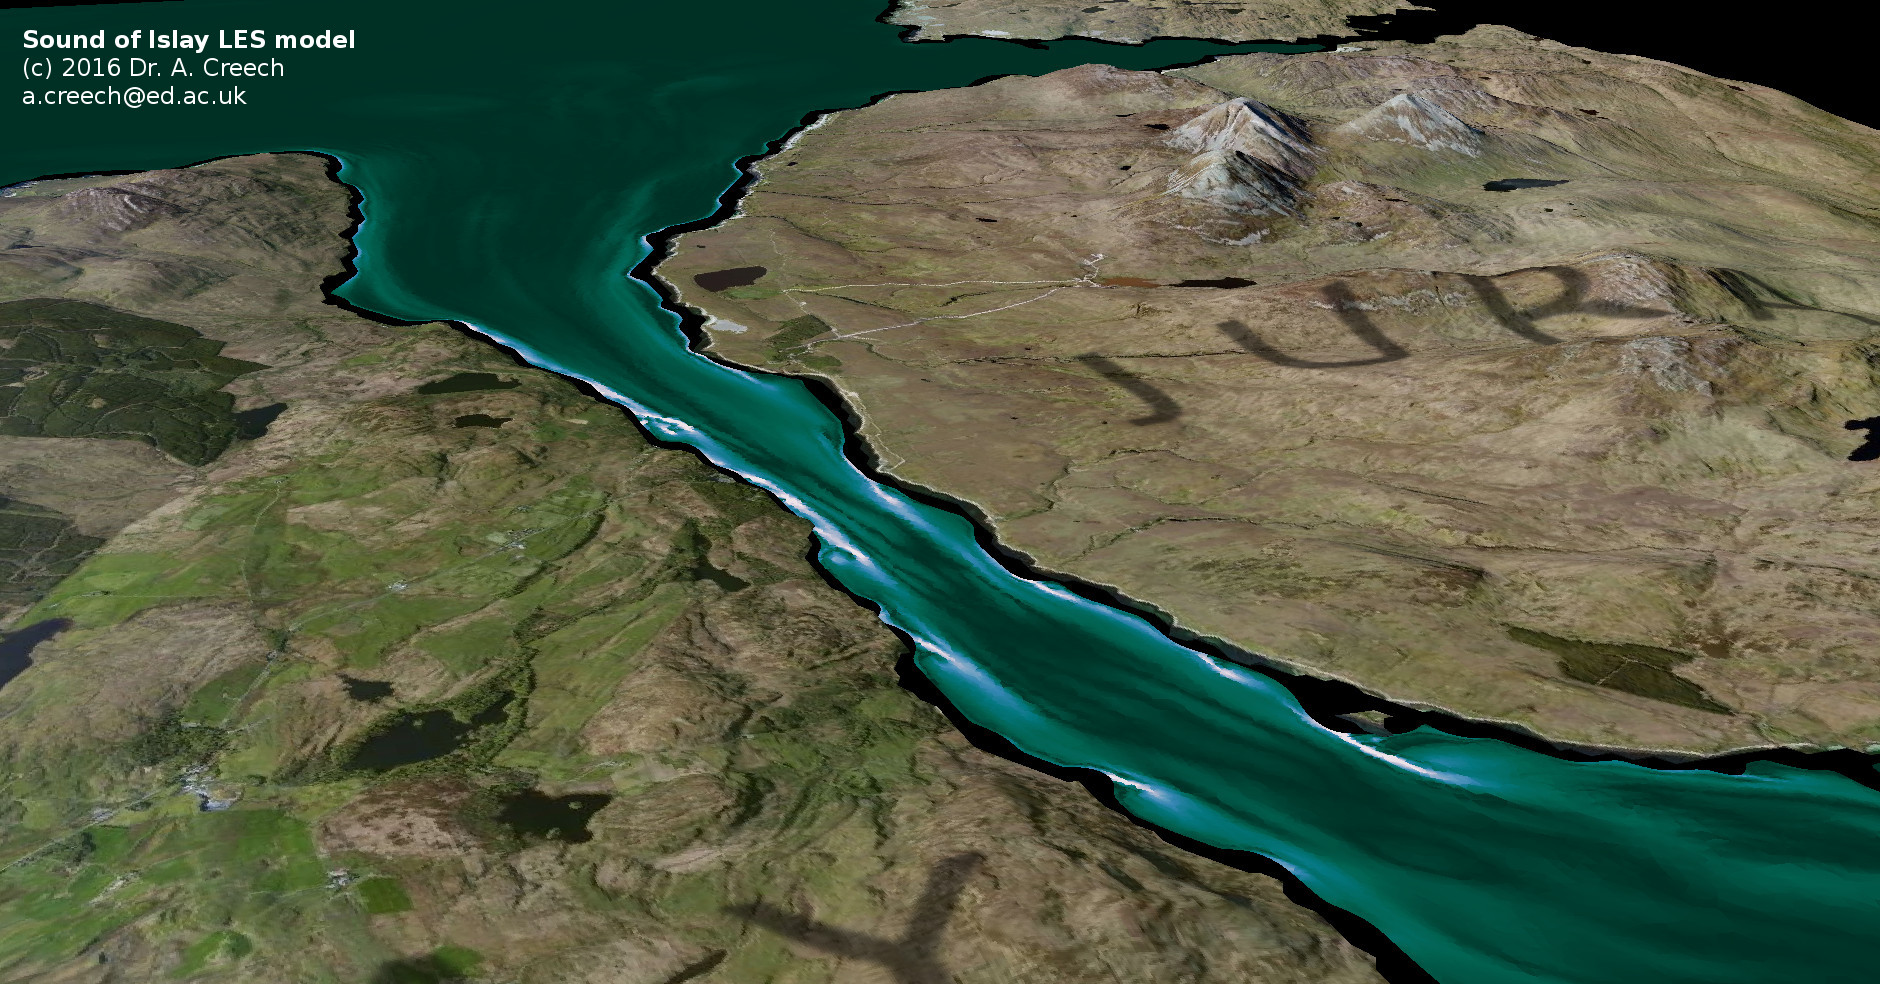 Sound of Islay Large Eddy Simulation model